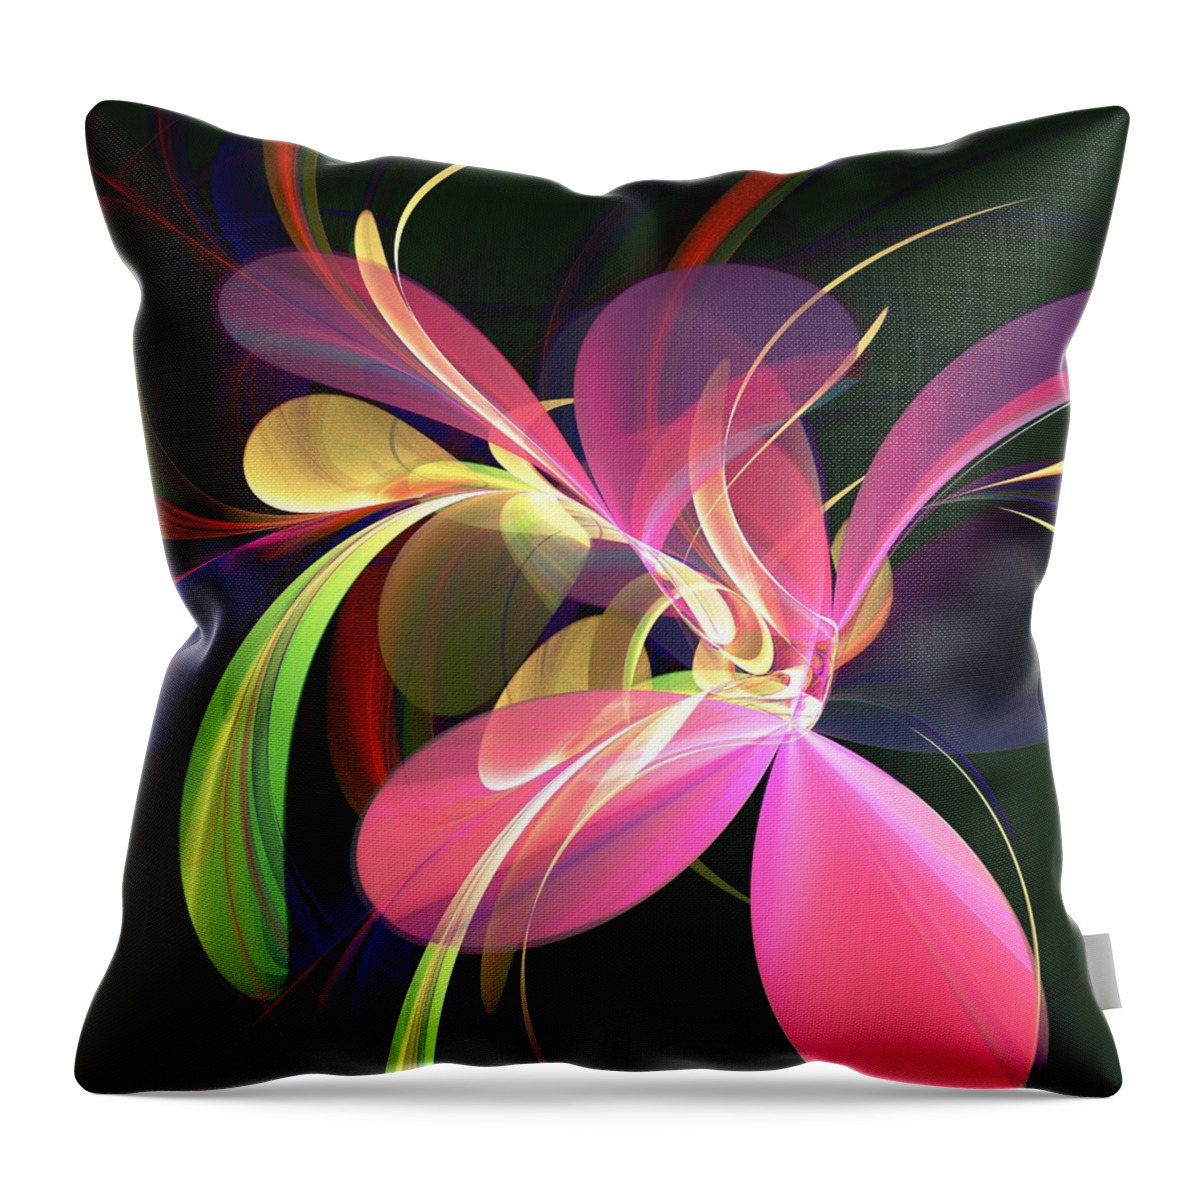 Computer Throw Pillow featuring the digital art Magic Flower by Anastasiya Malakhova